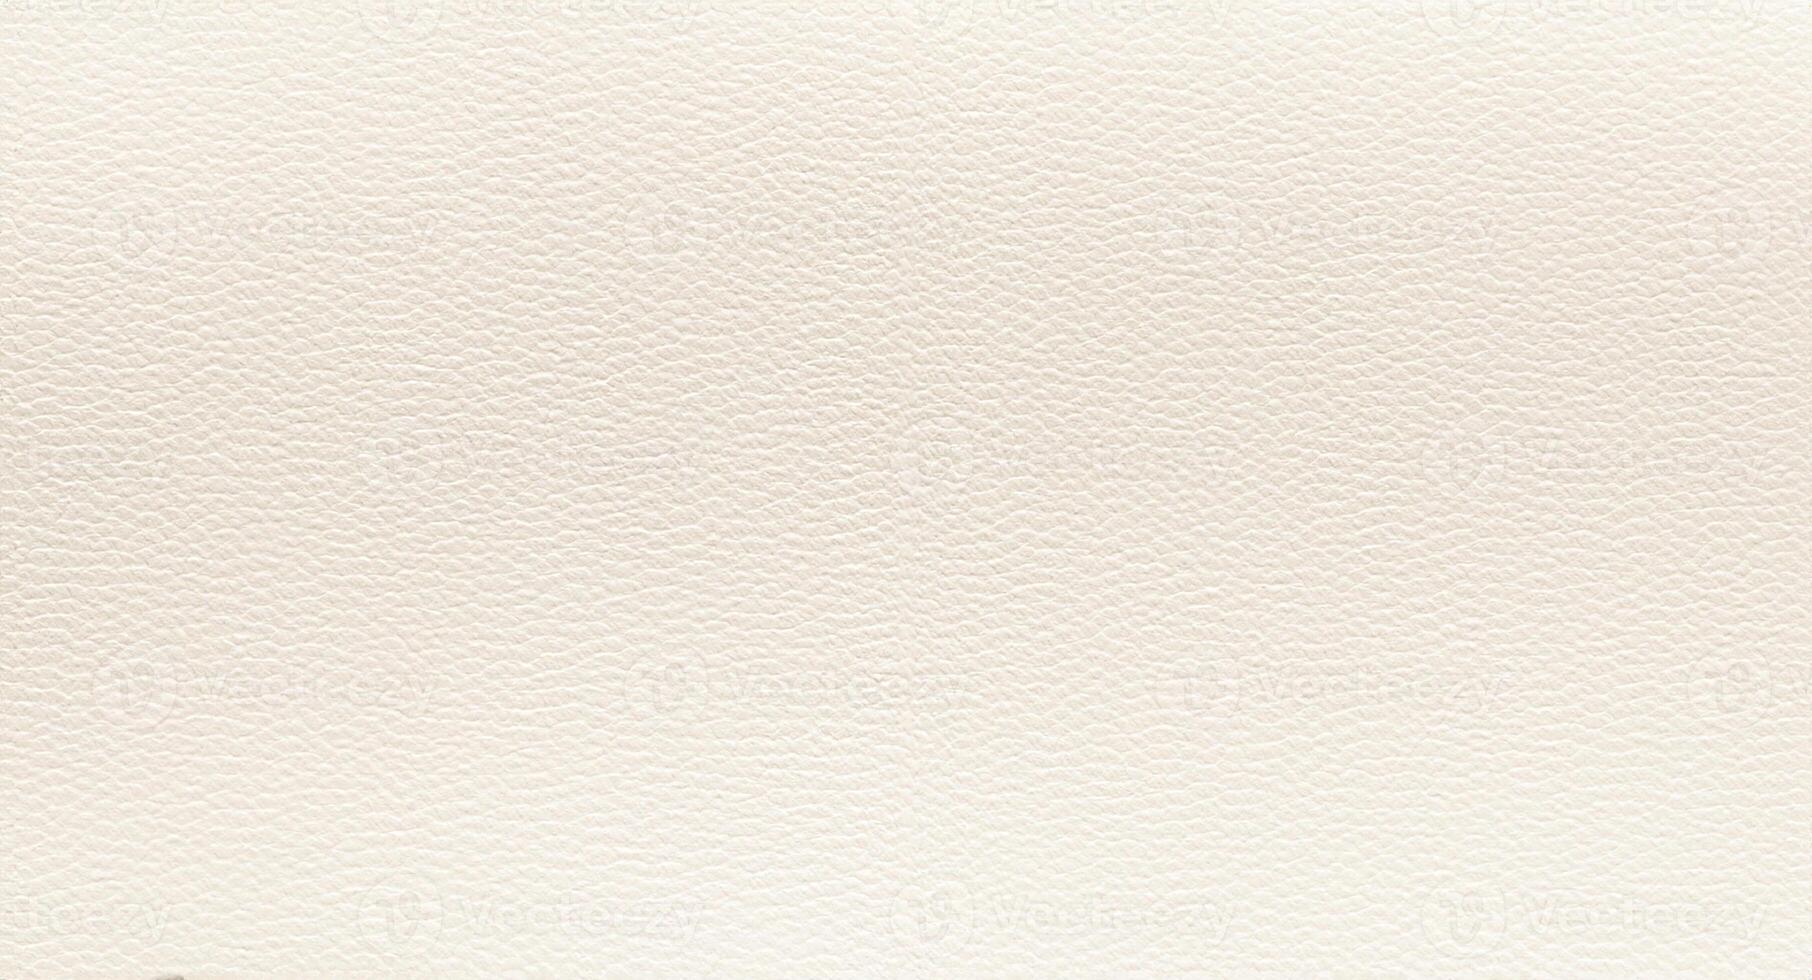 fondo de lujo de textura de cuero blanco foto